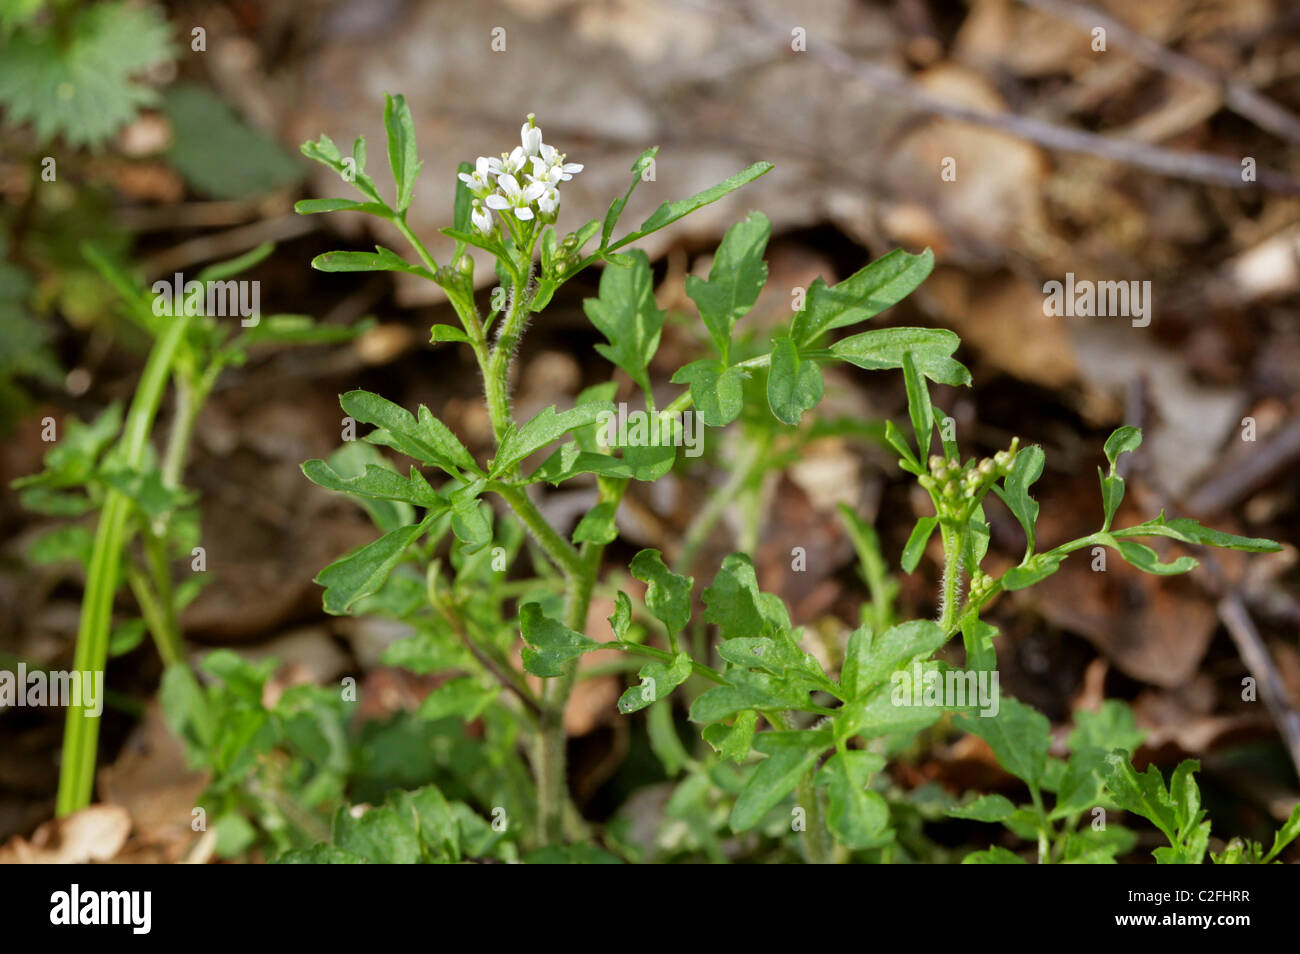 Wellig Bitter-Kresse, Cardamine Flexuosa, Brassicaceae. Woodland Blume, UK. Stockfoto